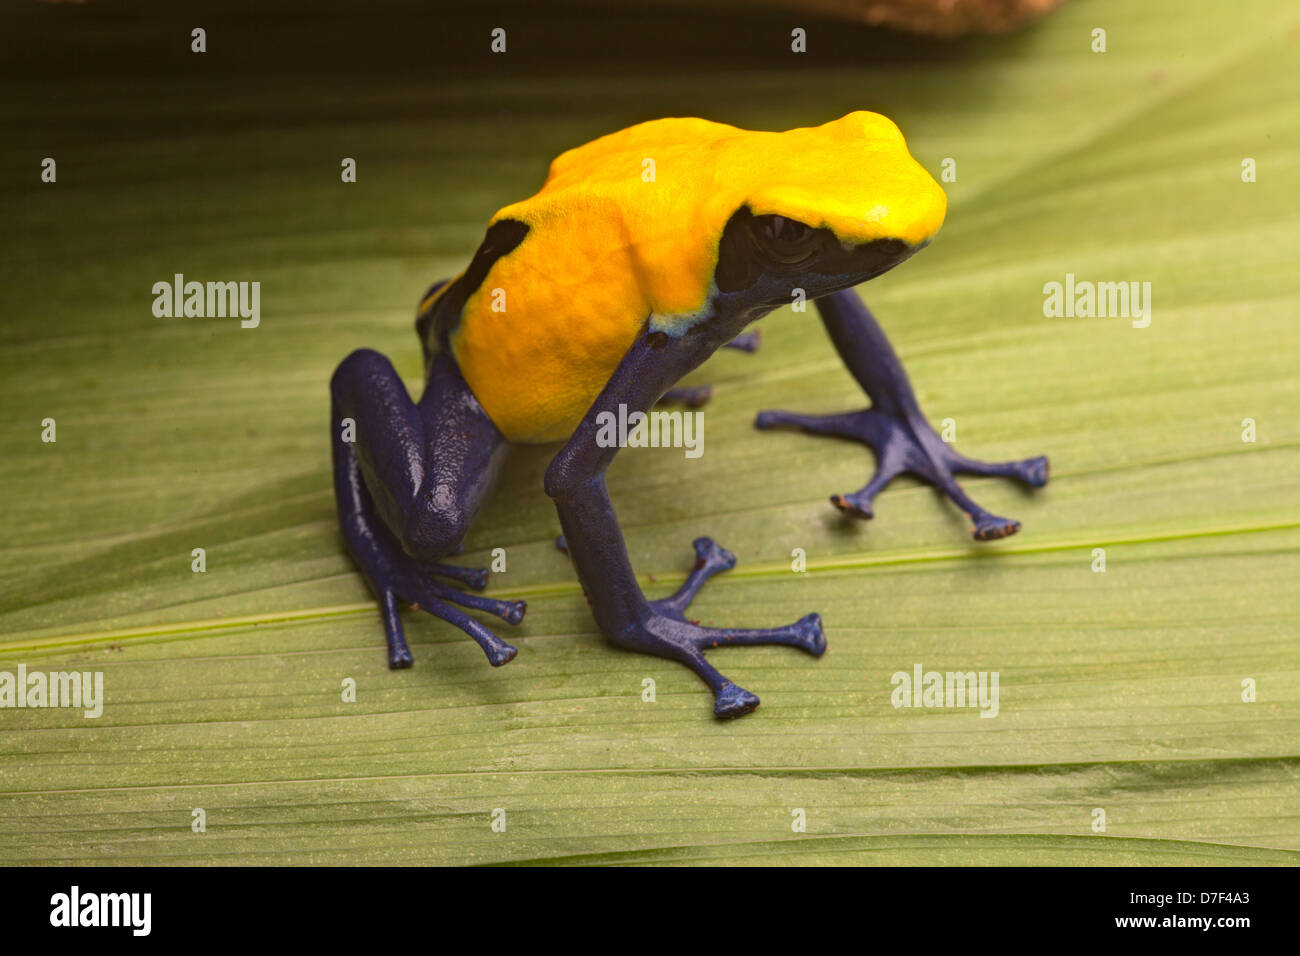 Yellow and blue poison dart frog, Dendrobates tinctorius citronella. A beautiful poisonous animal from the Amazon rain forest. Stock Photo